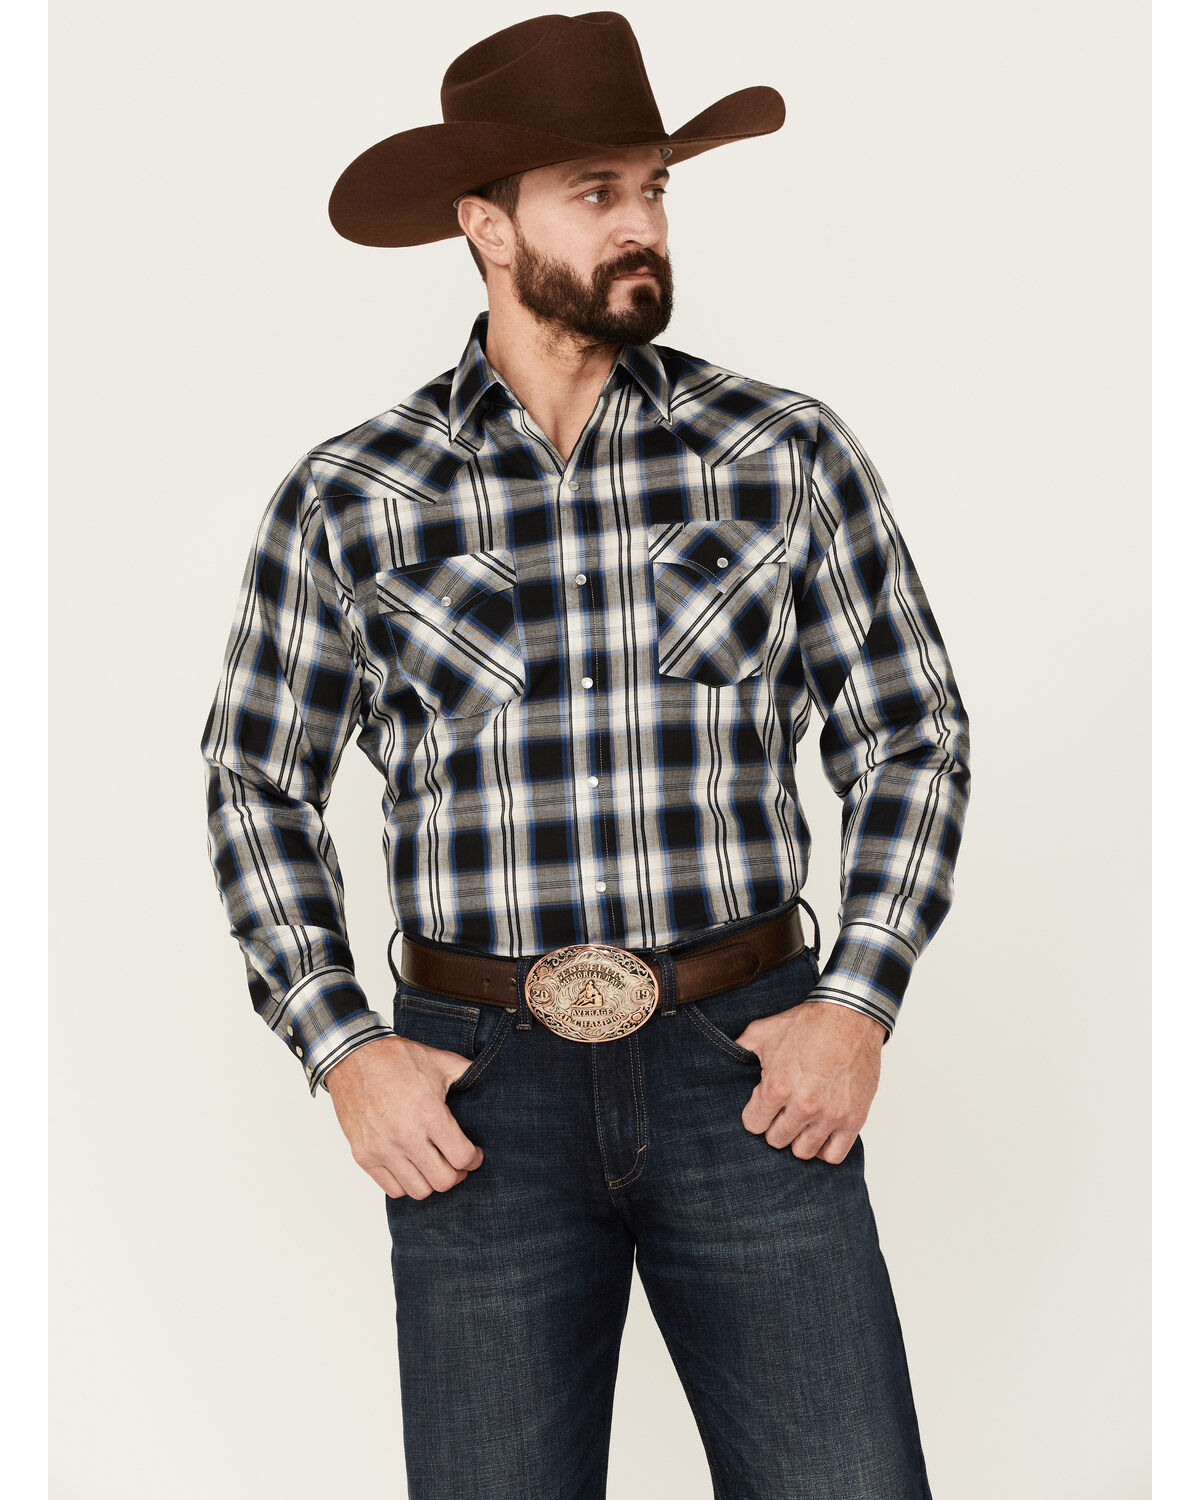 Ely Cattleman Mens Western Shirt...Dark Teal Long Sleeve Pearl Snap Size Med